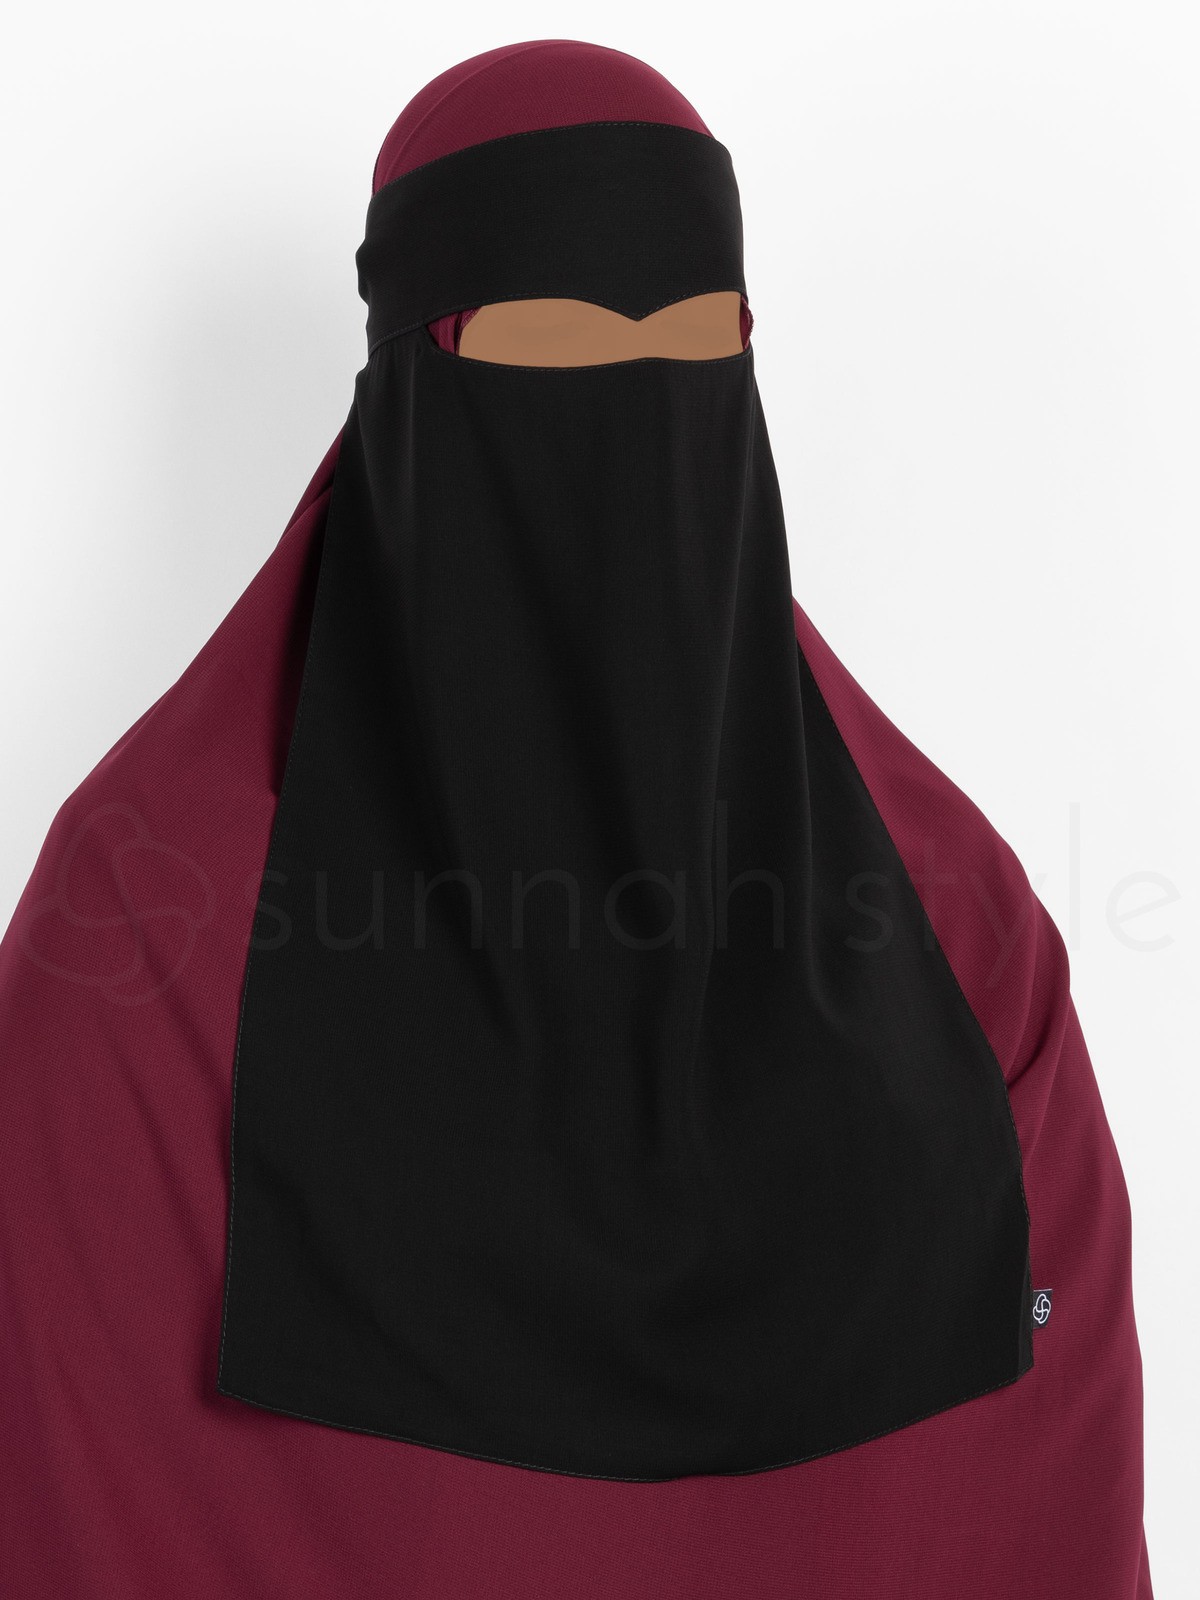 Sunnah Style - One Layer Widow's Peak Niqab (Black)